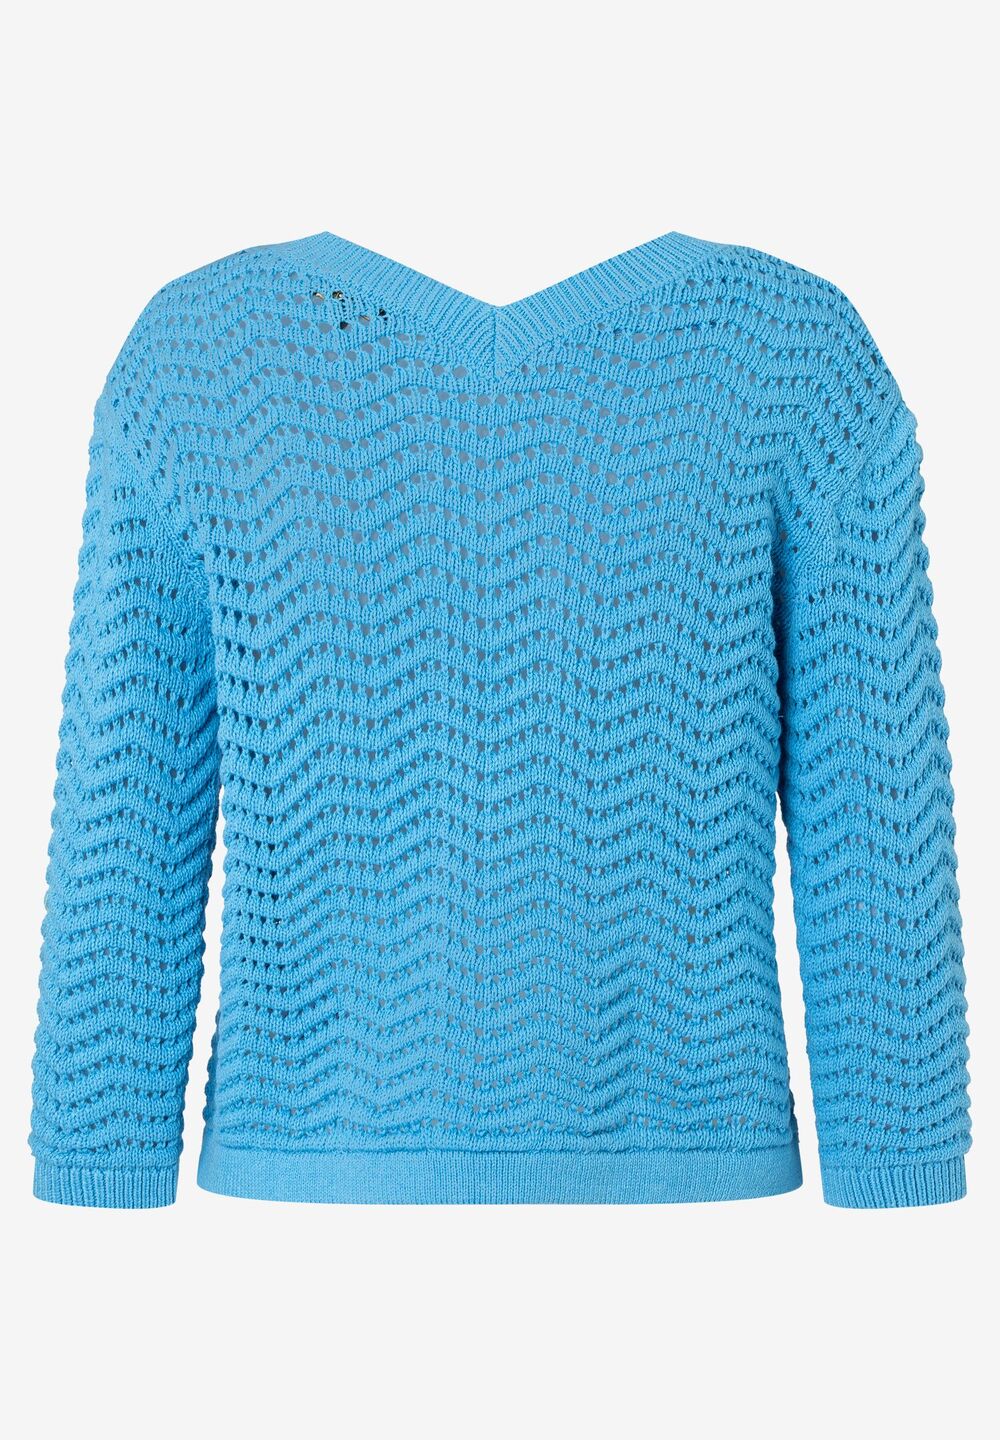 Ajour-Pullover, happy blue, Sommer-Kollektion, blauDetailansicht 2